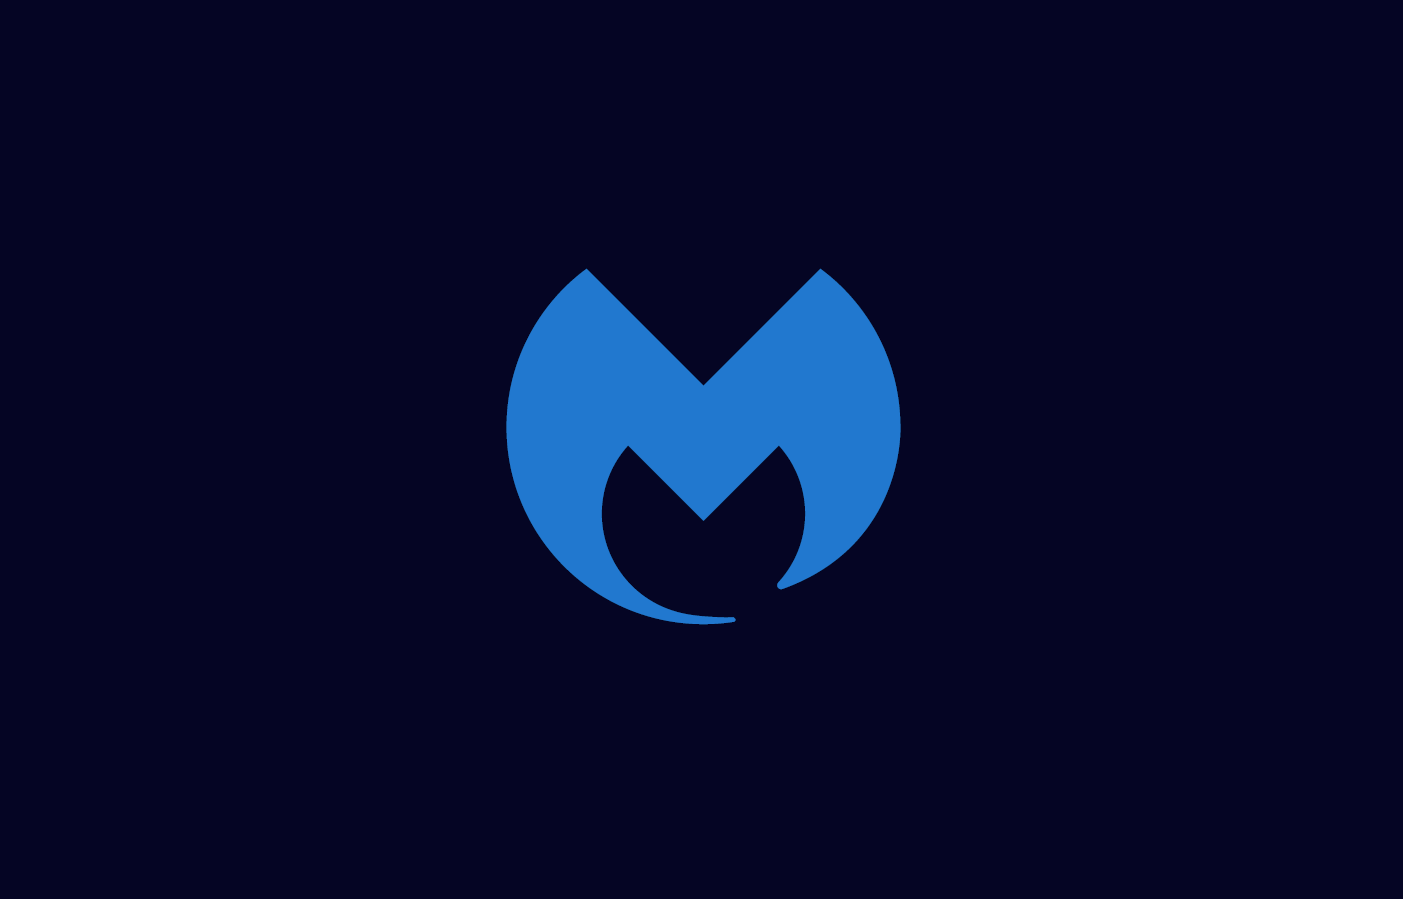 Malwarebytes Logo - New enterprise solution, logo, new website, same great Malwarebytes